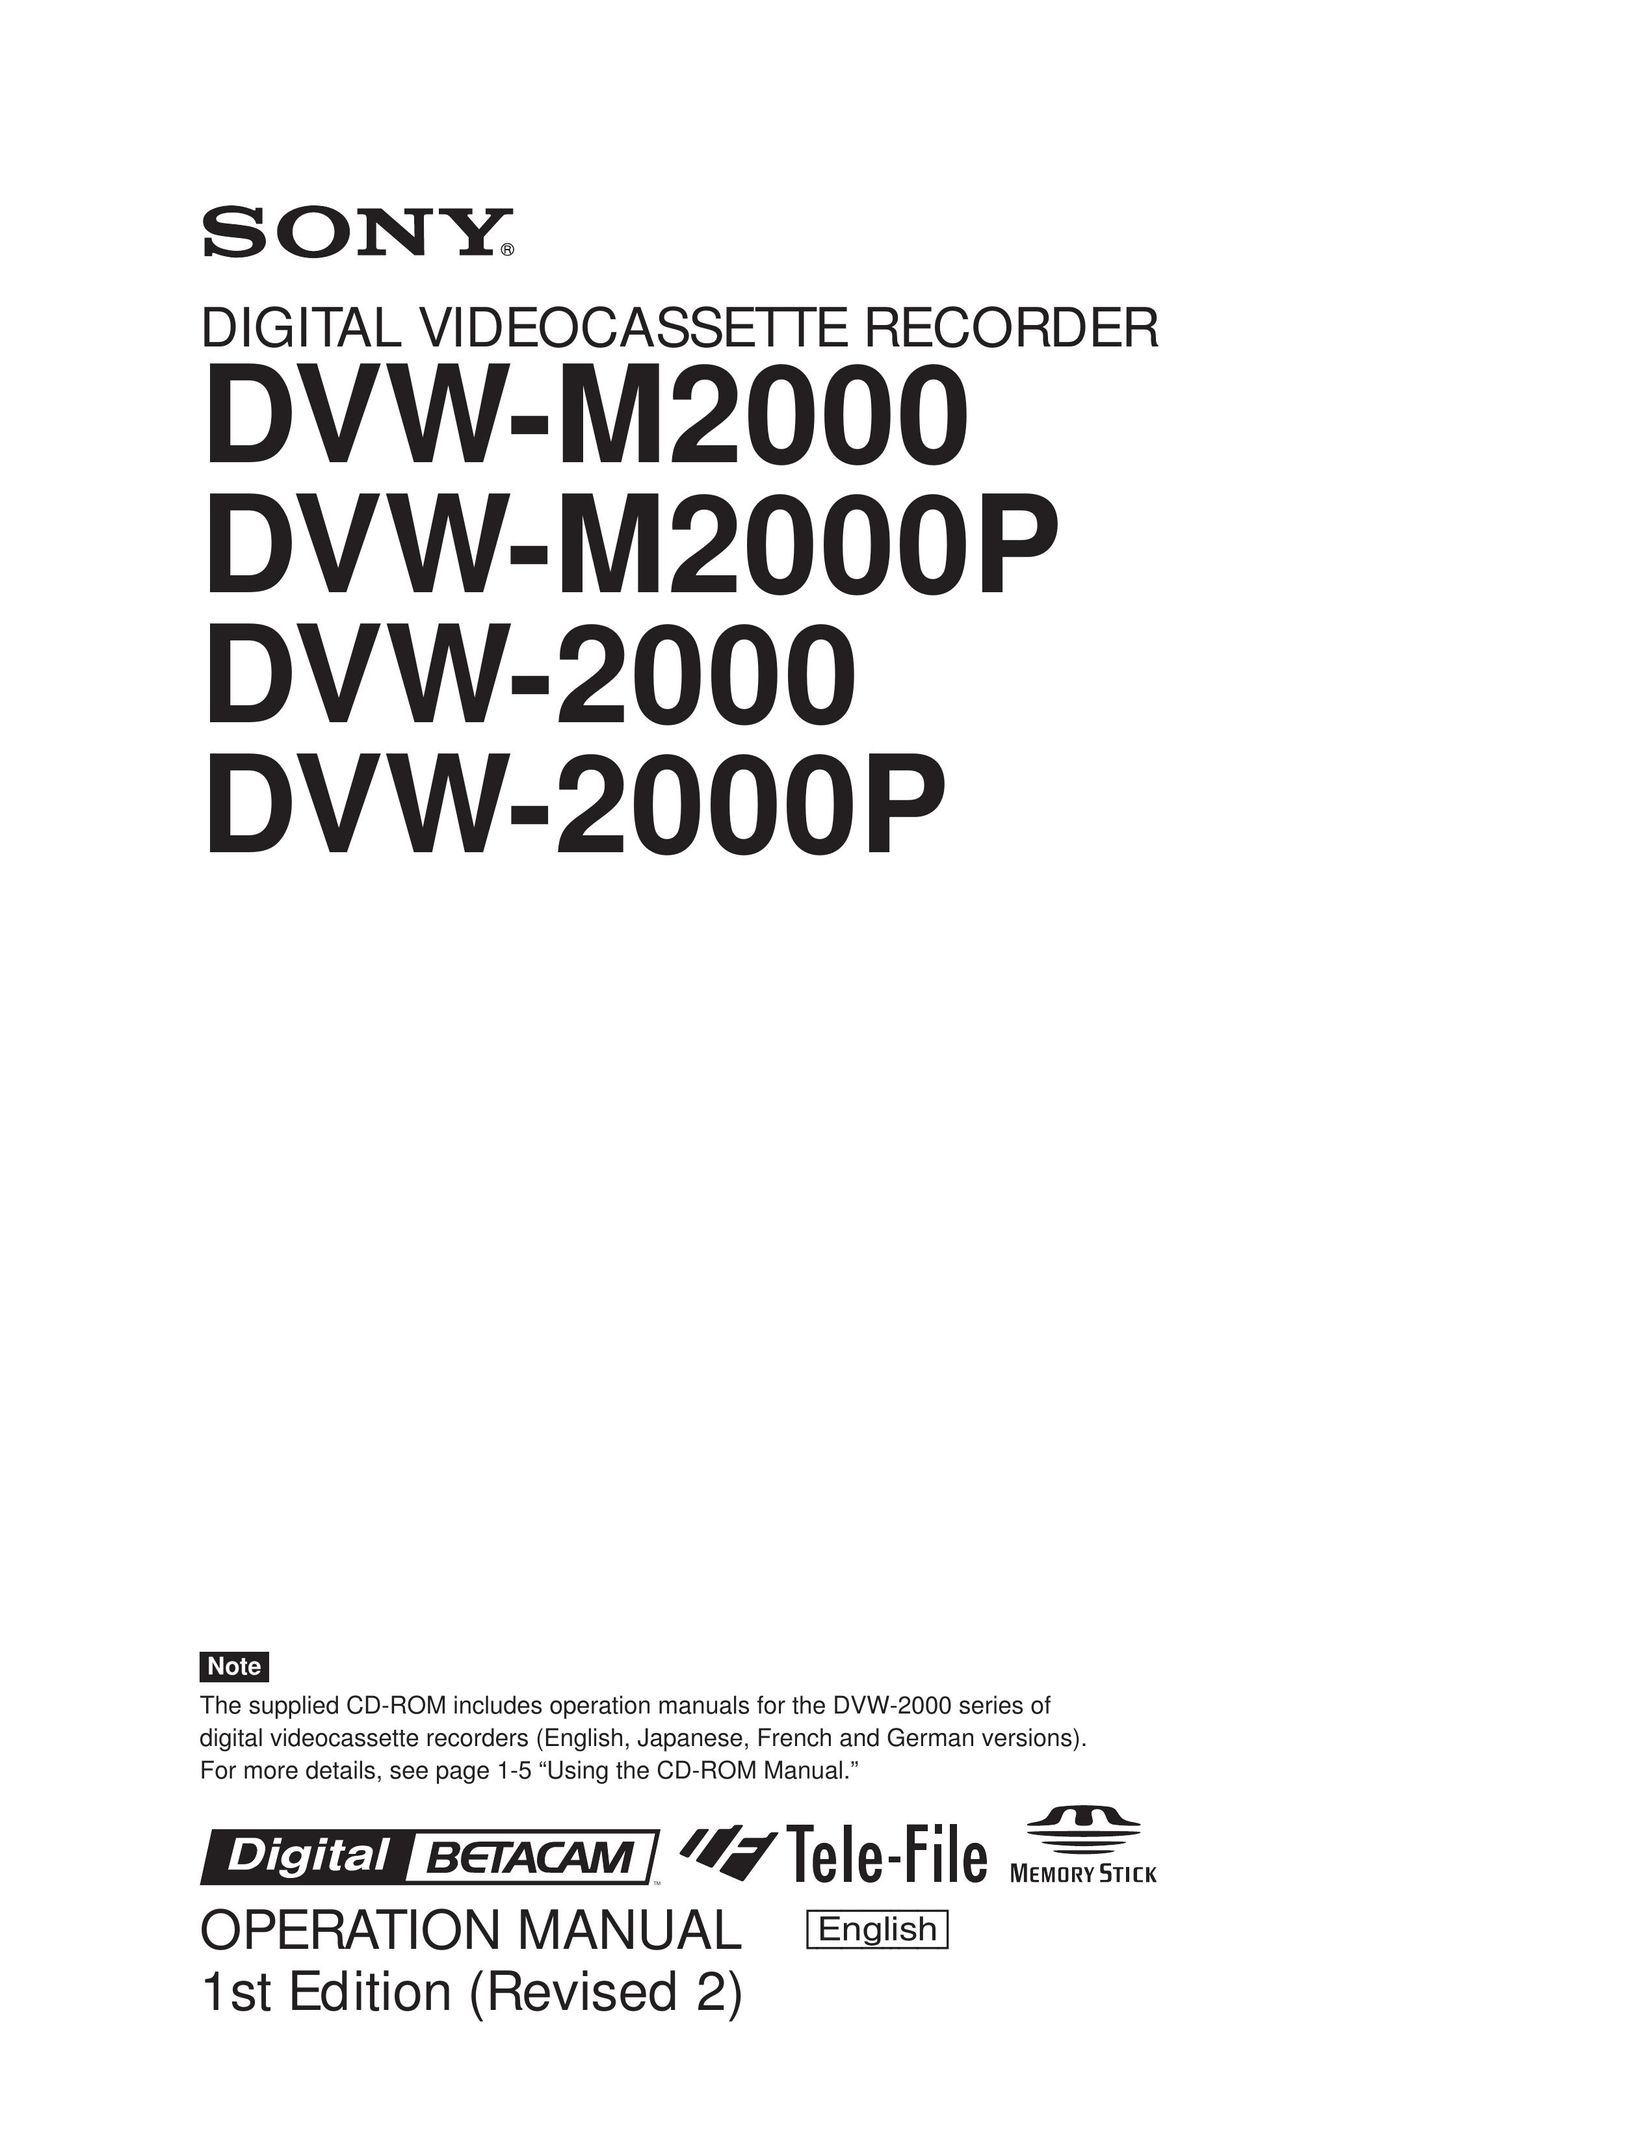 Sony DVW-2000P DVR User Manual